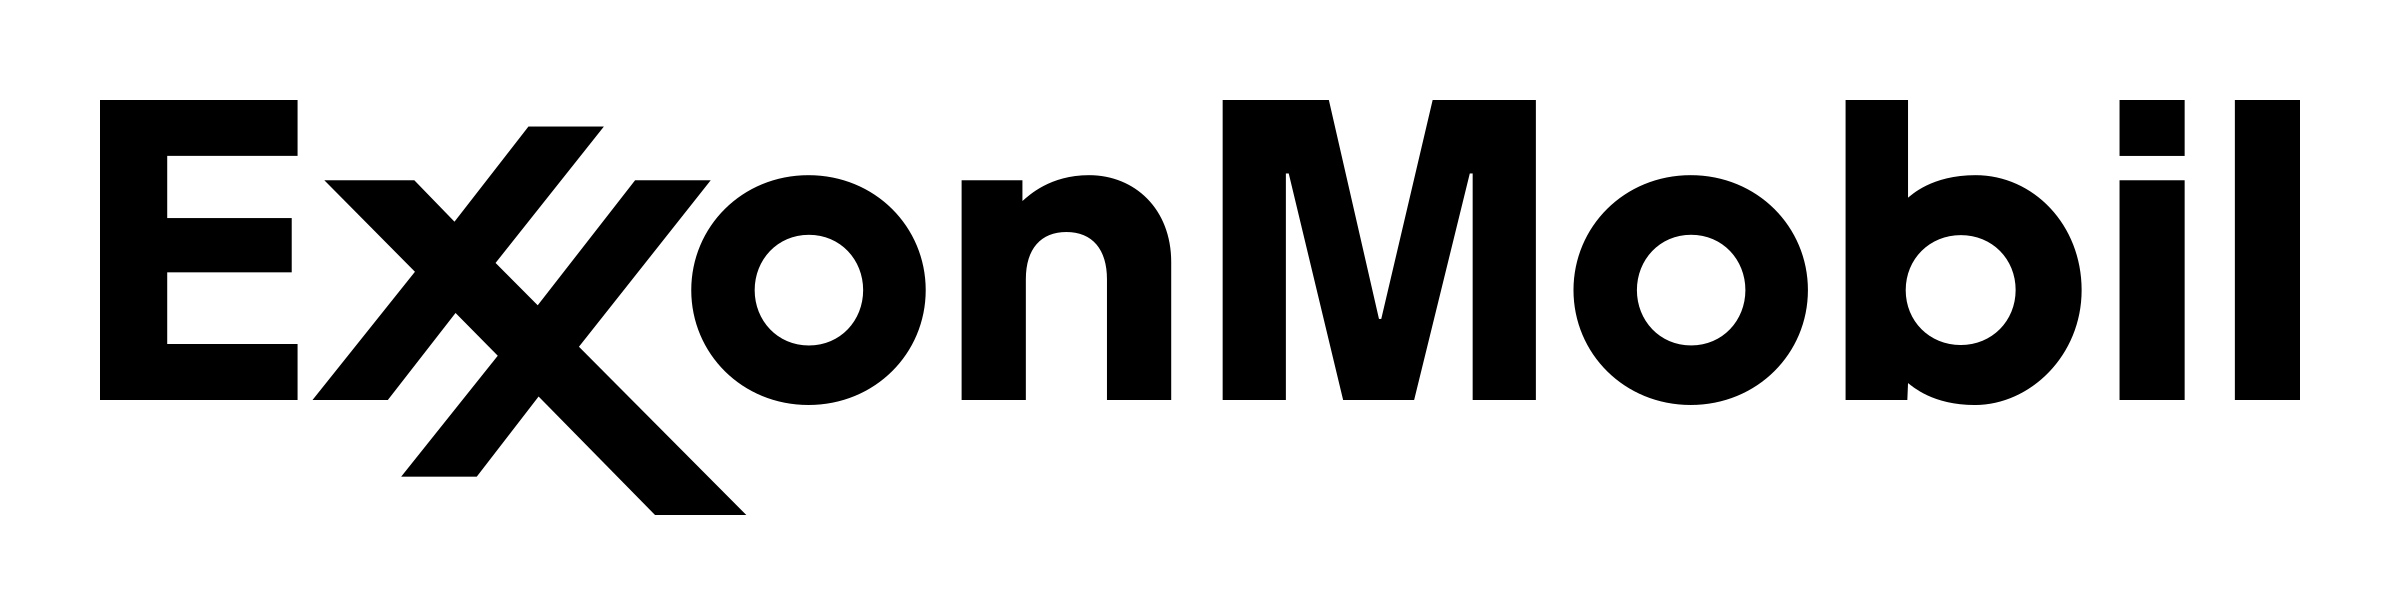 Black and White Mobil Logo - ExxonMobil Logo PNG Transparent & SVG Vector - Freebie Supply